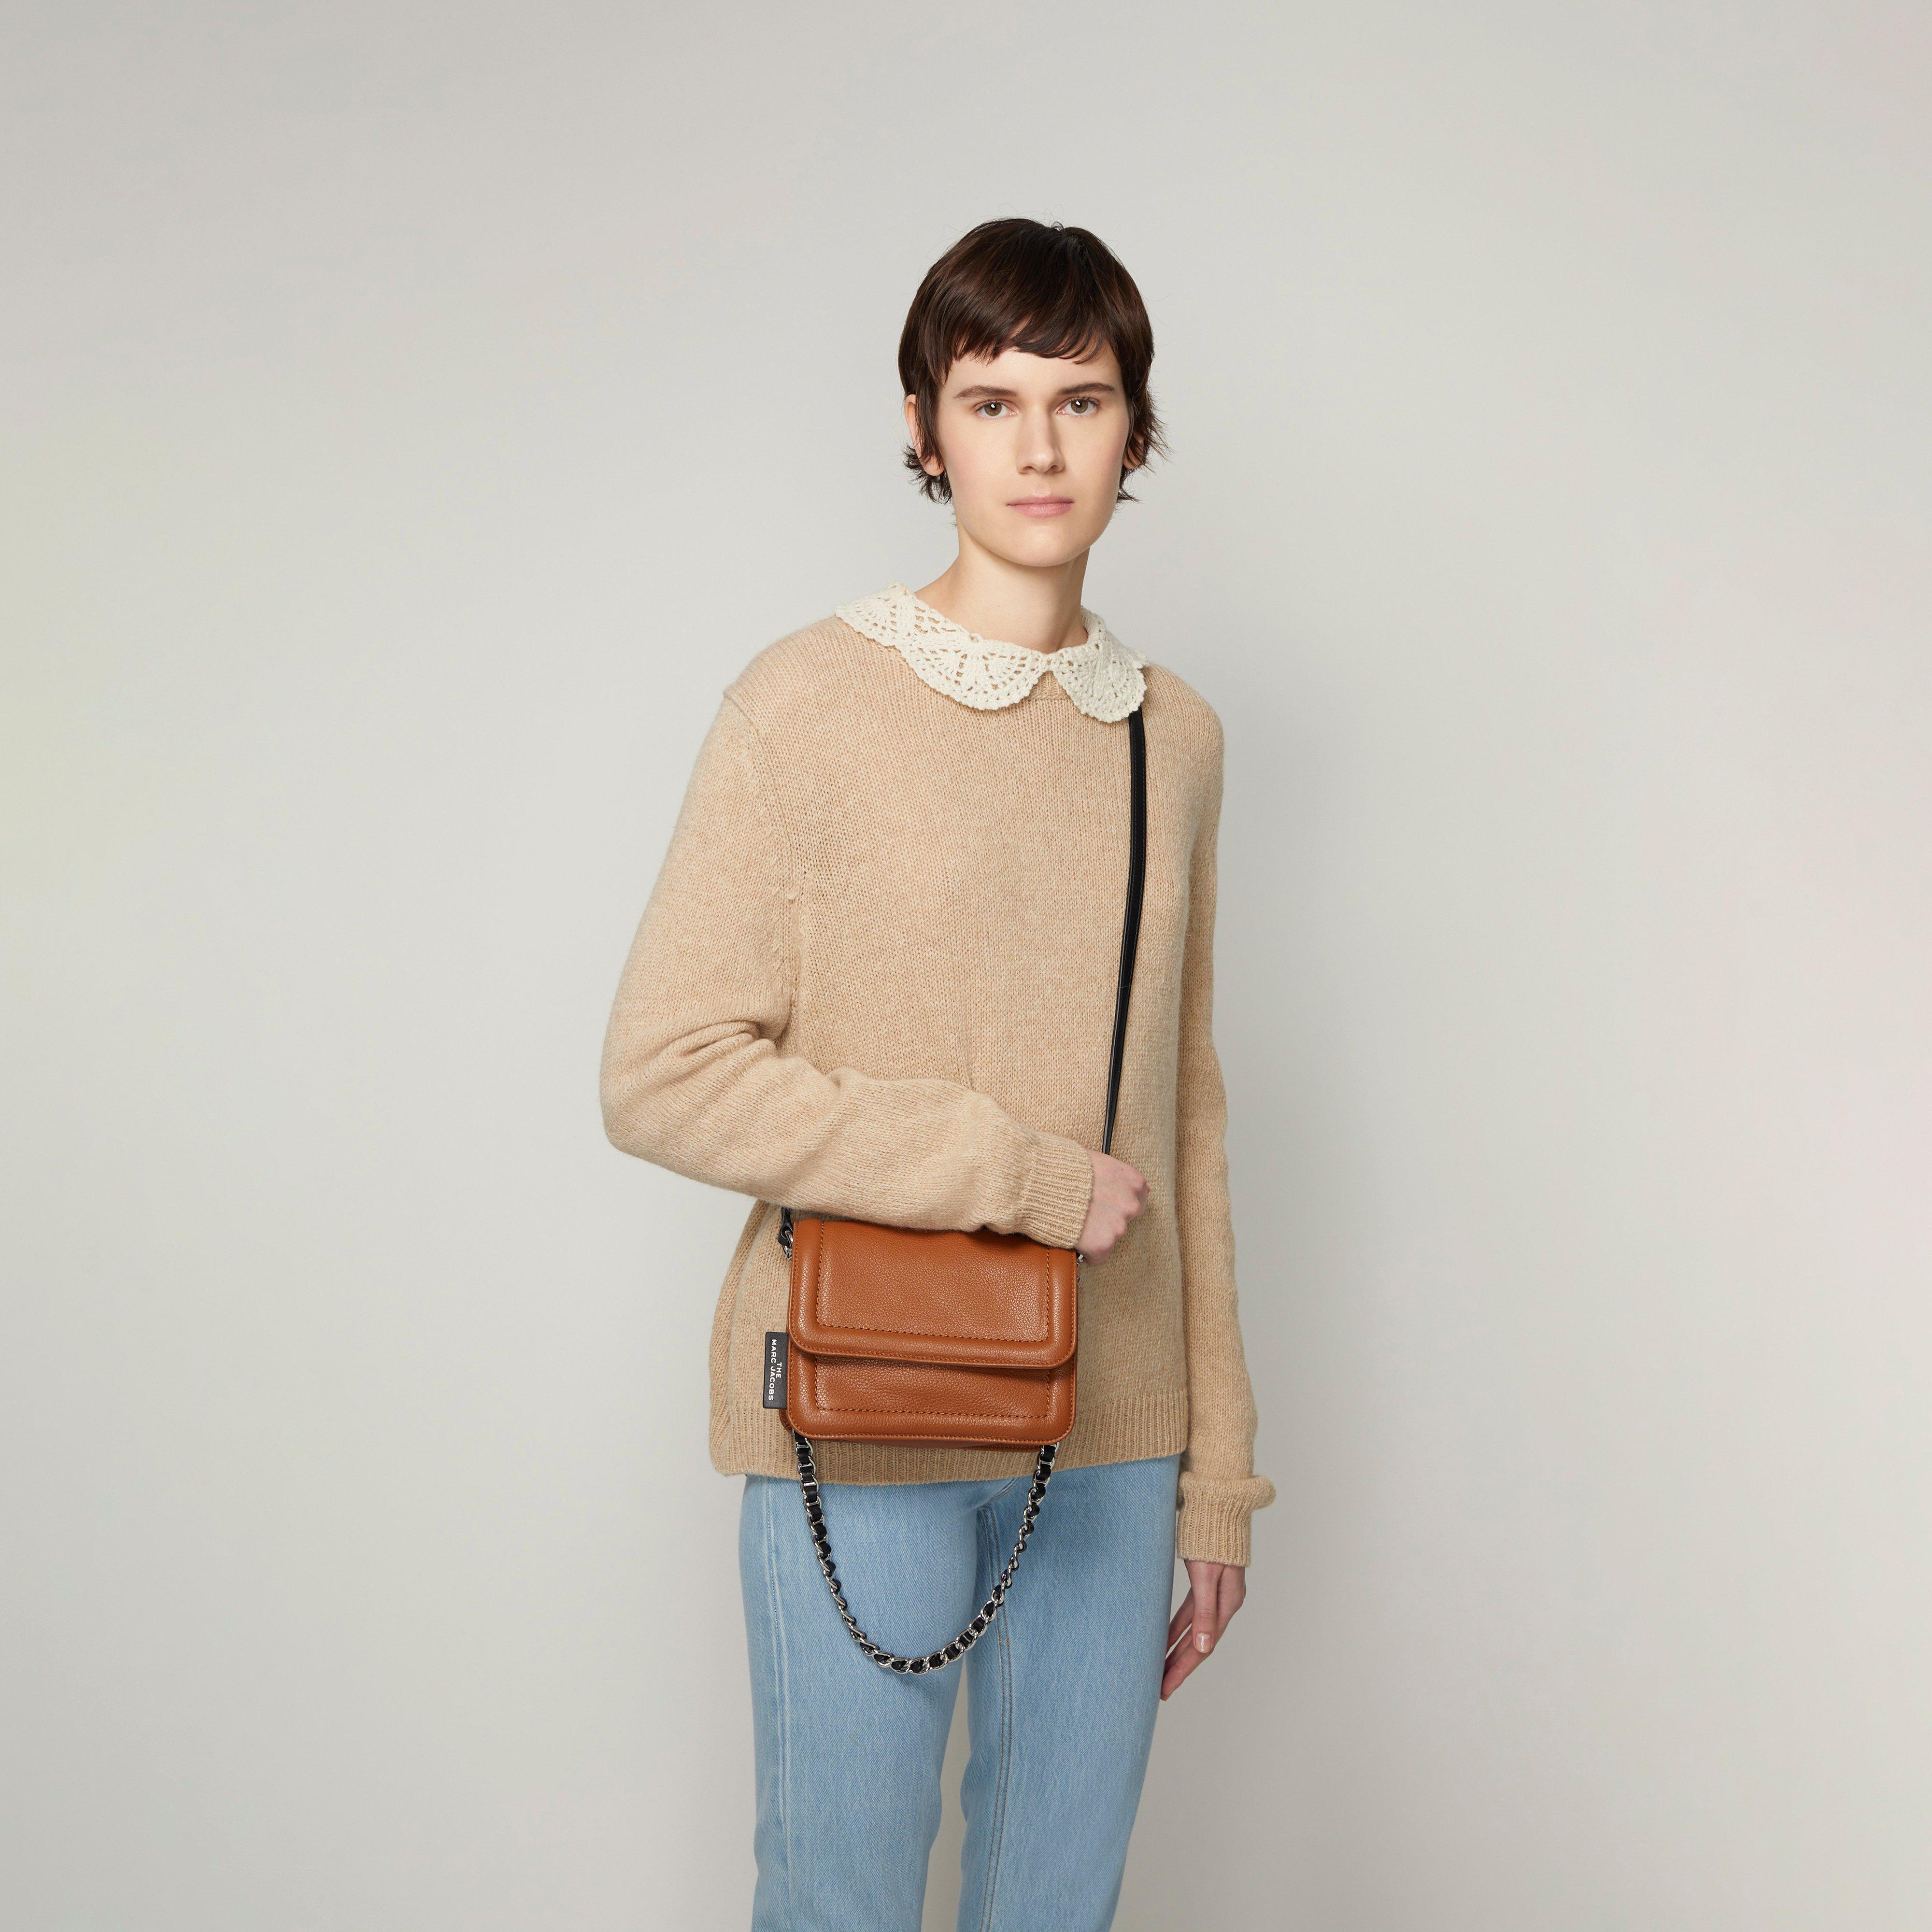 Marc Jacobs The Mini Cushion Bag in Brown